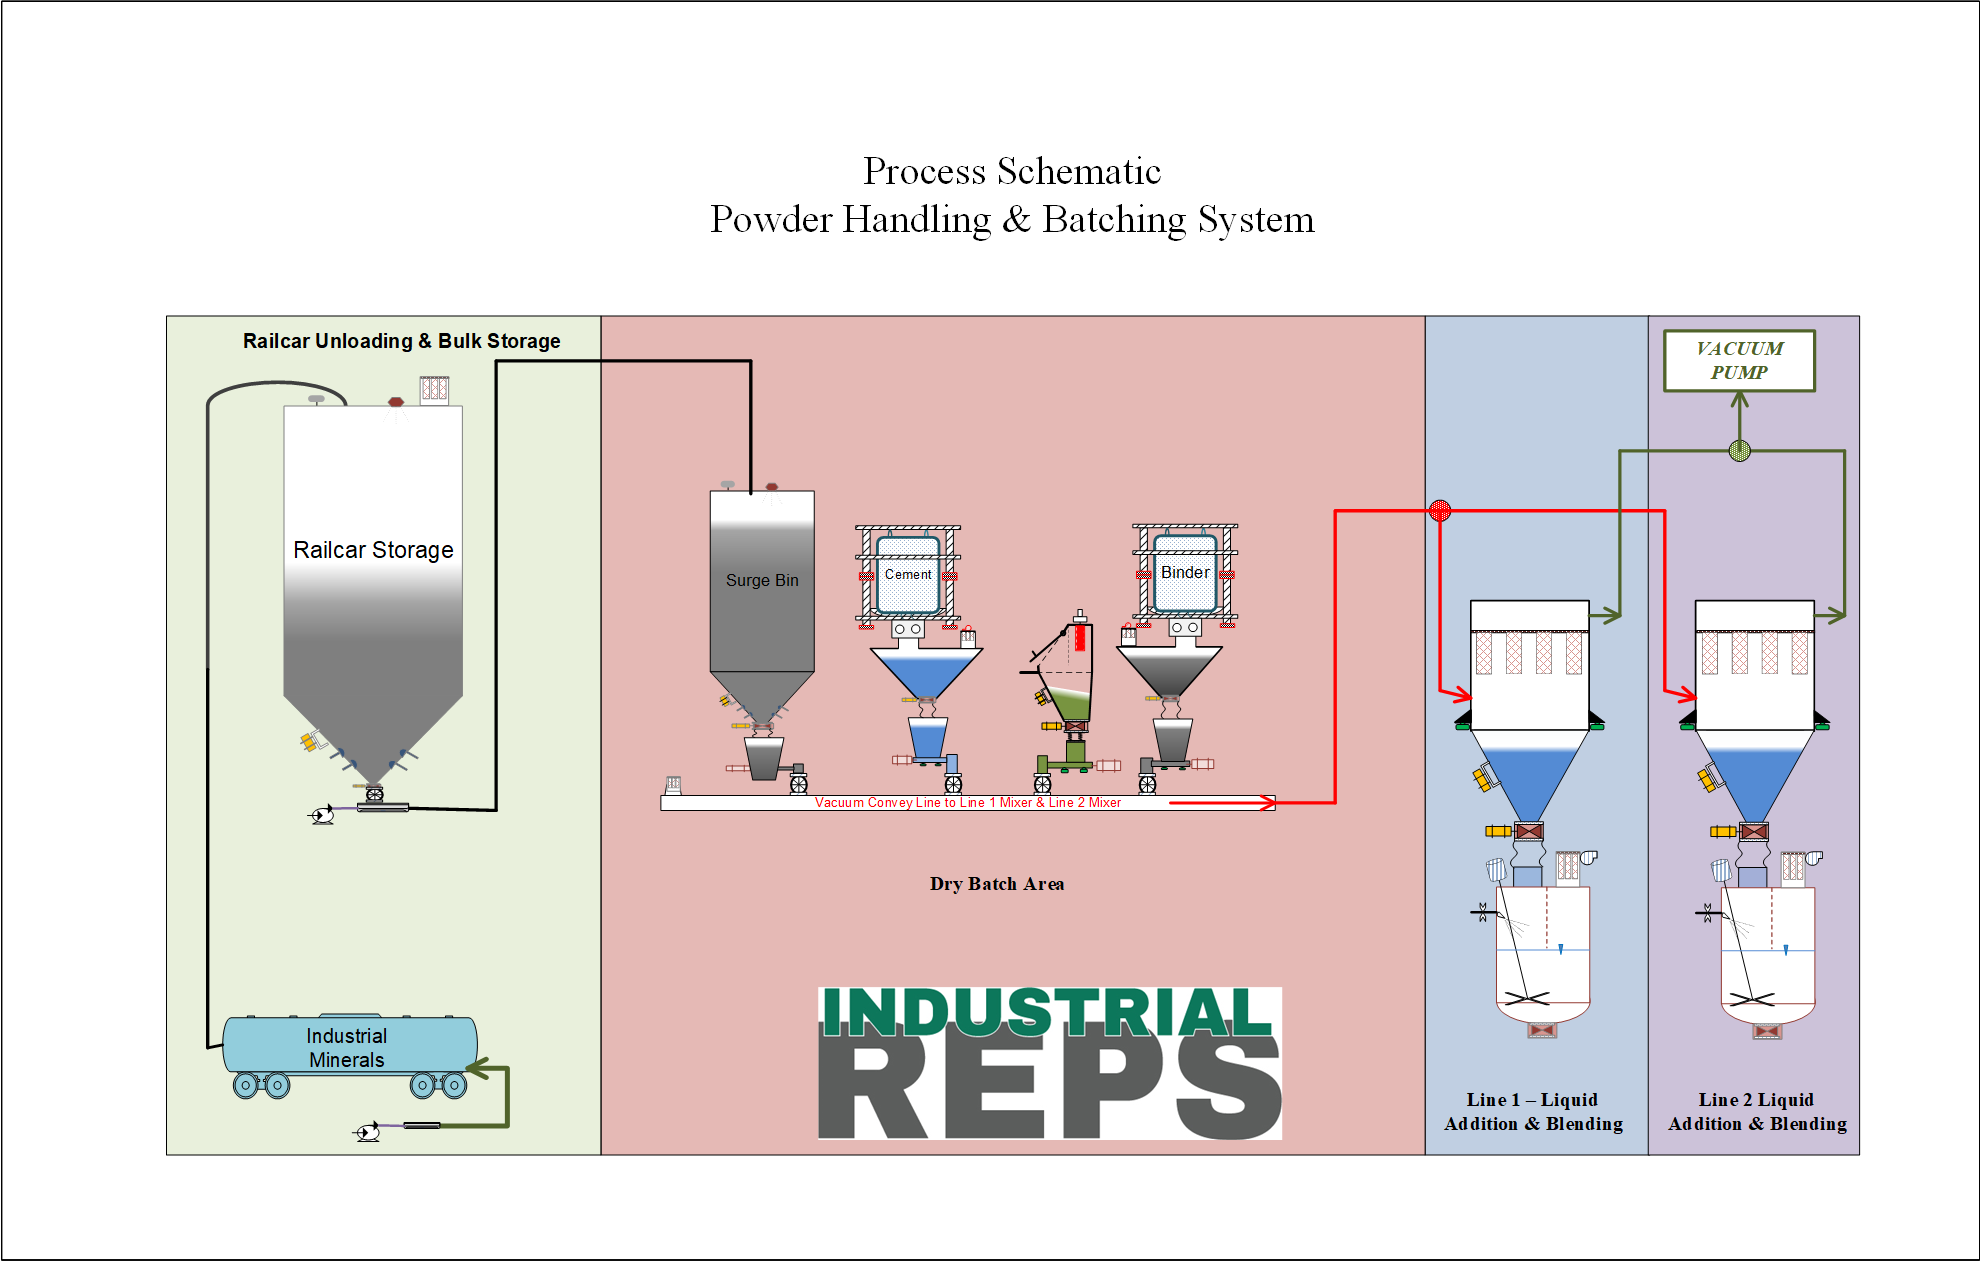 Process Flow - Railcar Unloading, Powder Transfer & Batching (1)